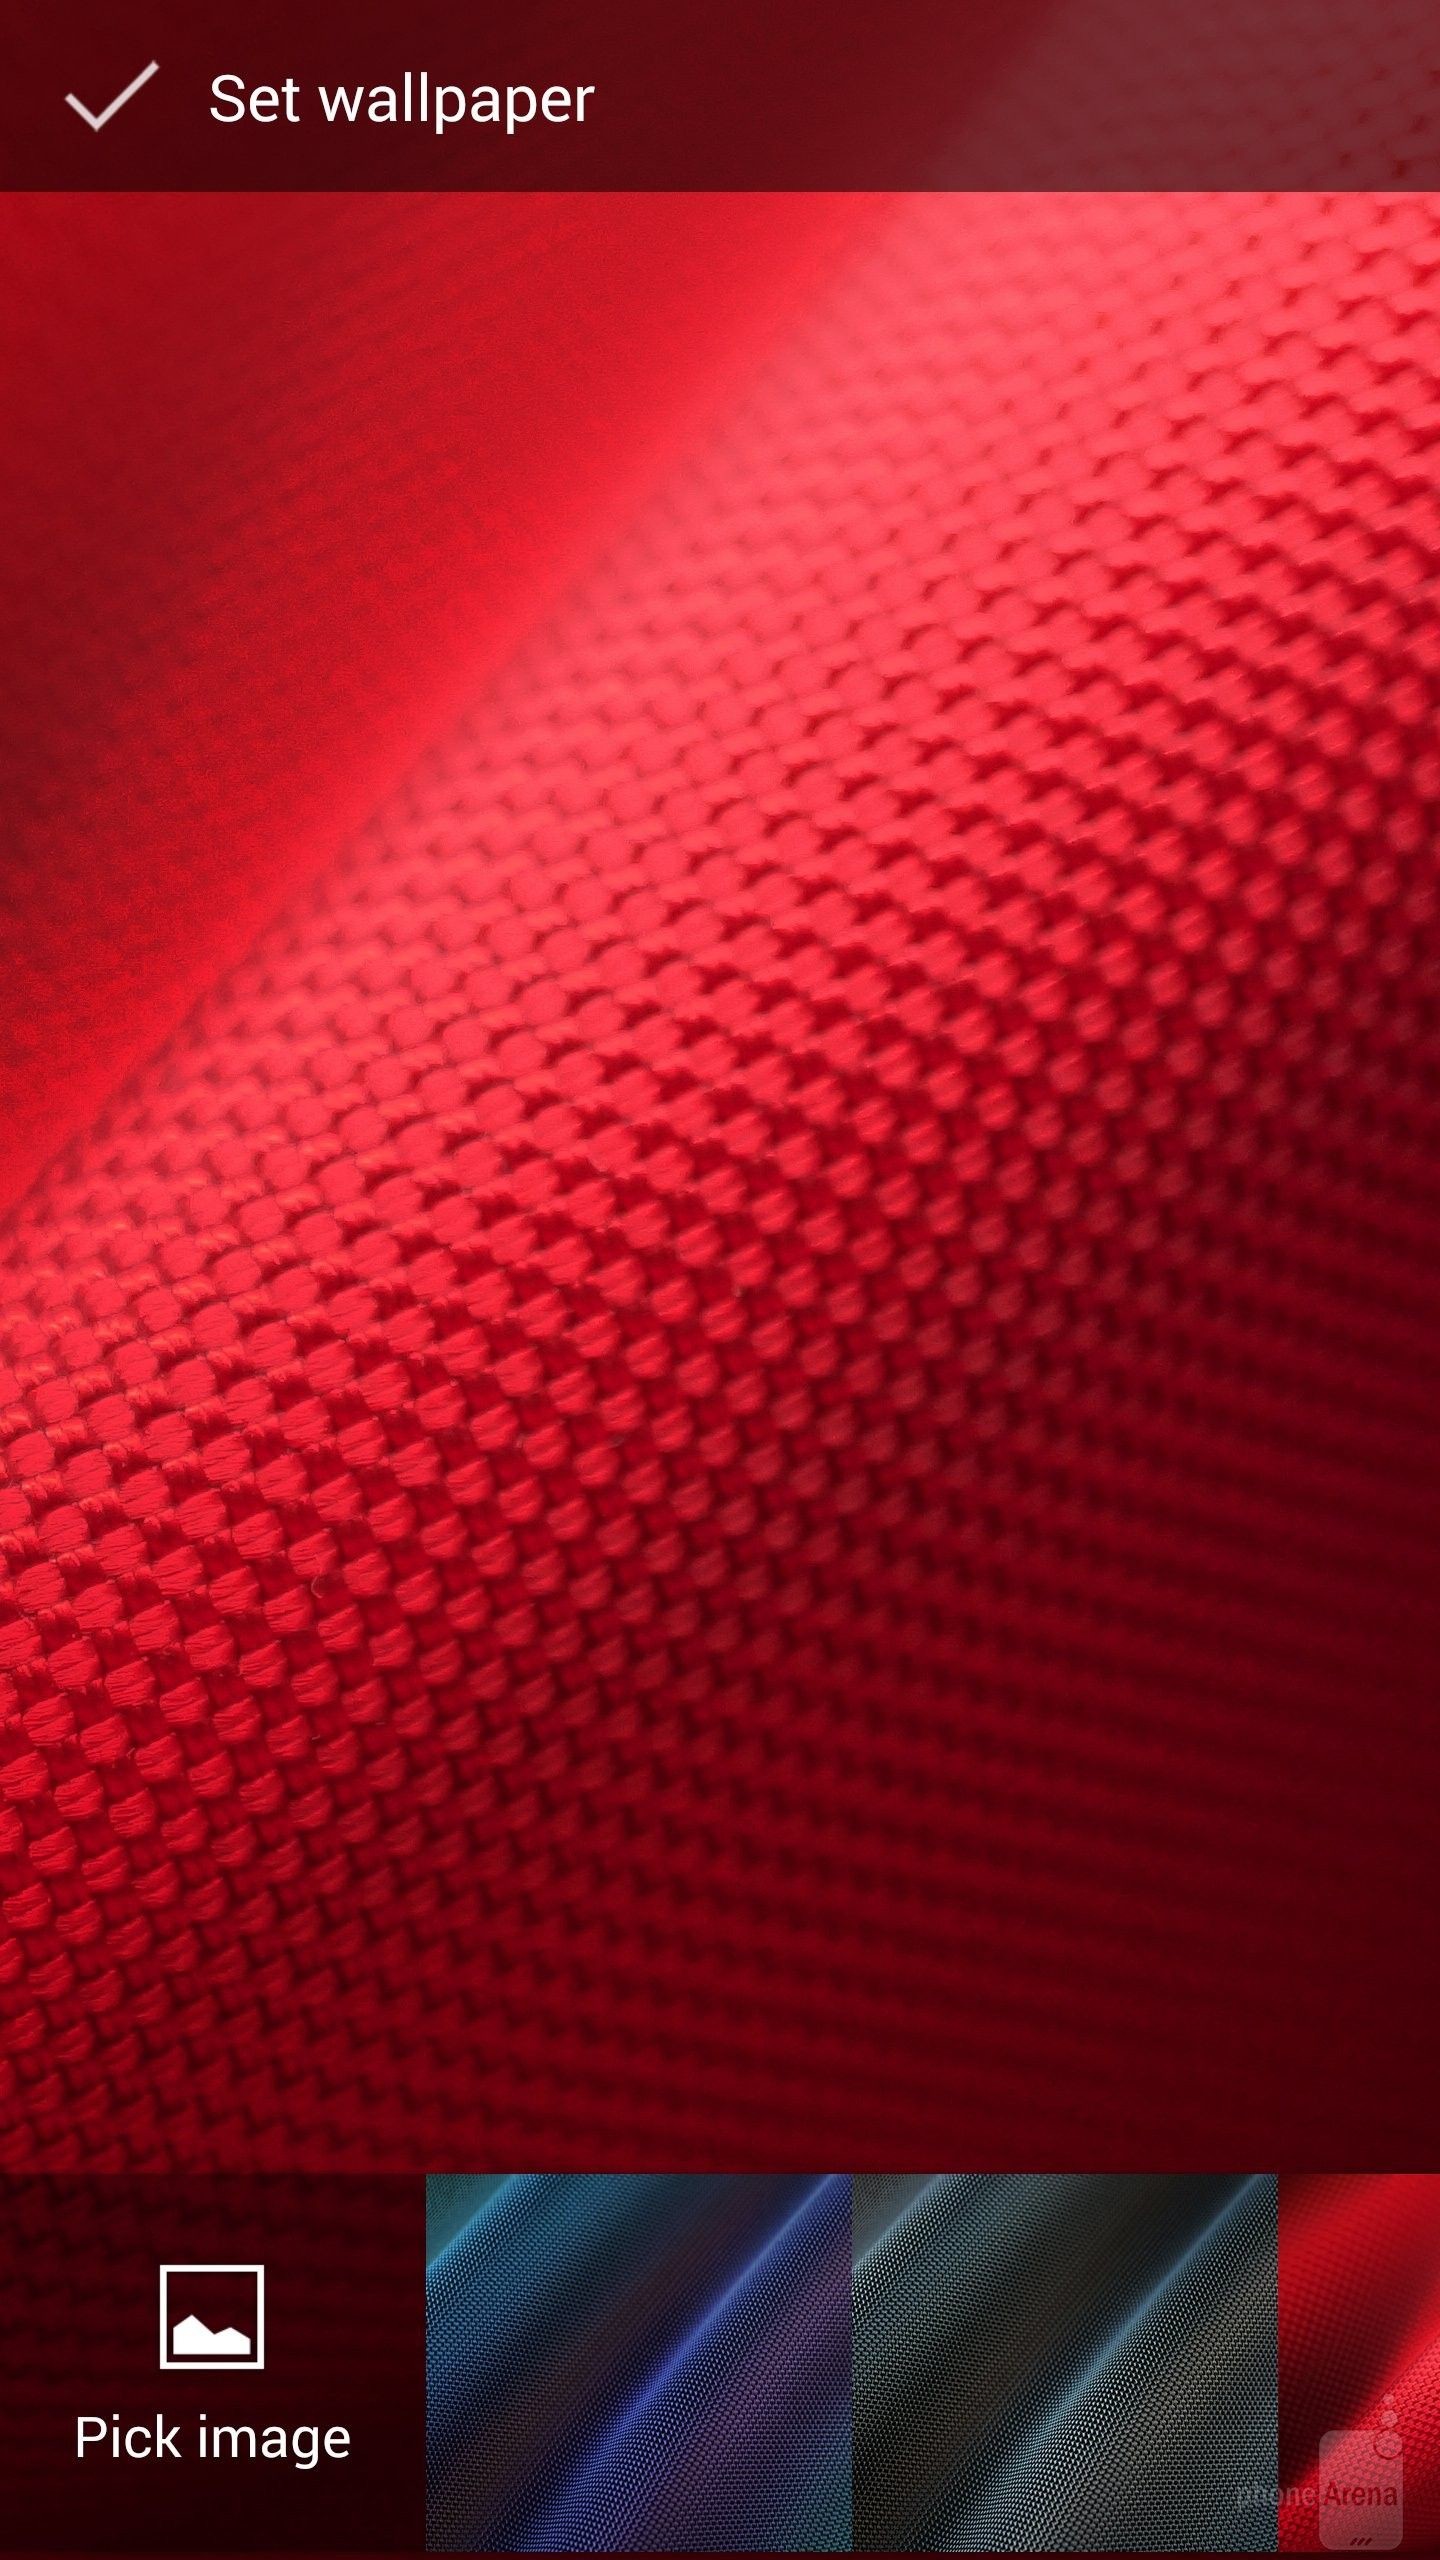 1440x2560 Motorola DROID Turbo Review Iphone 6 Plus Wallpaper, Red Silk, Iphone6